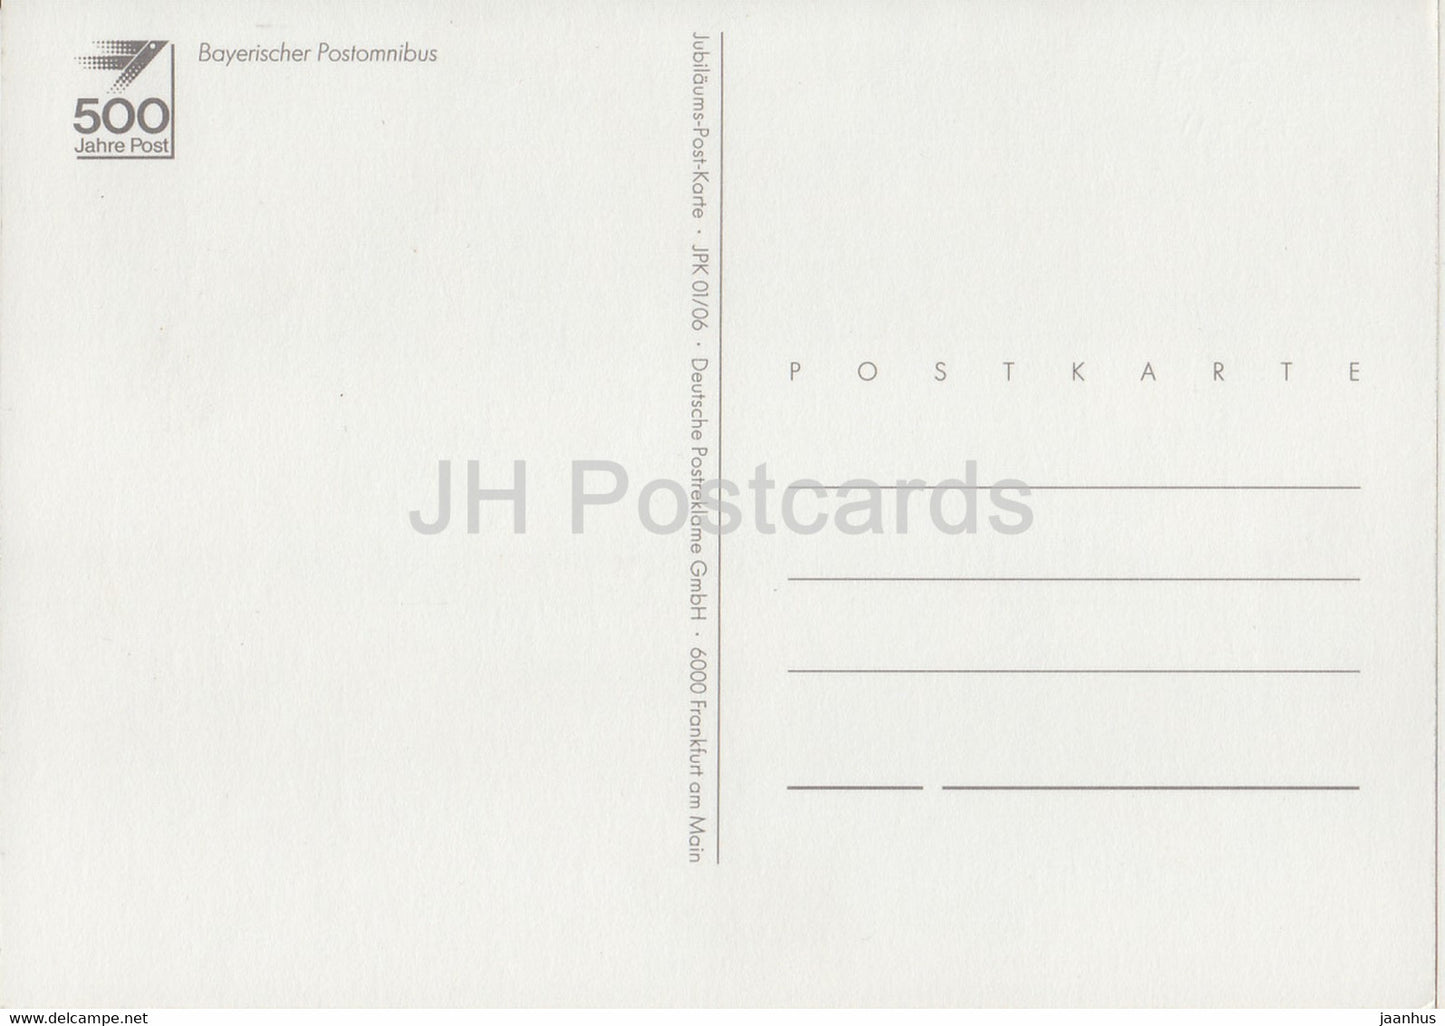 Bayerischer Postomnibus - Postal Car - horse - illustration - Germany - unused